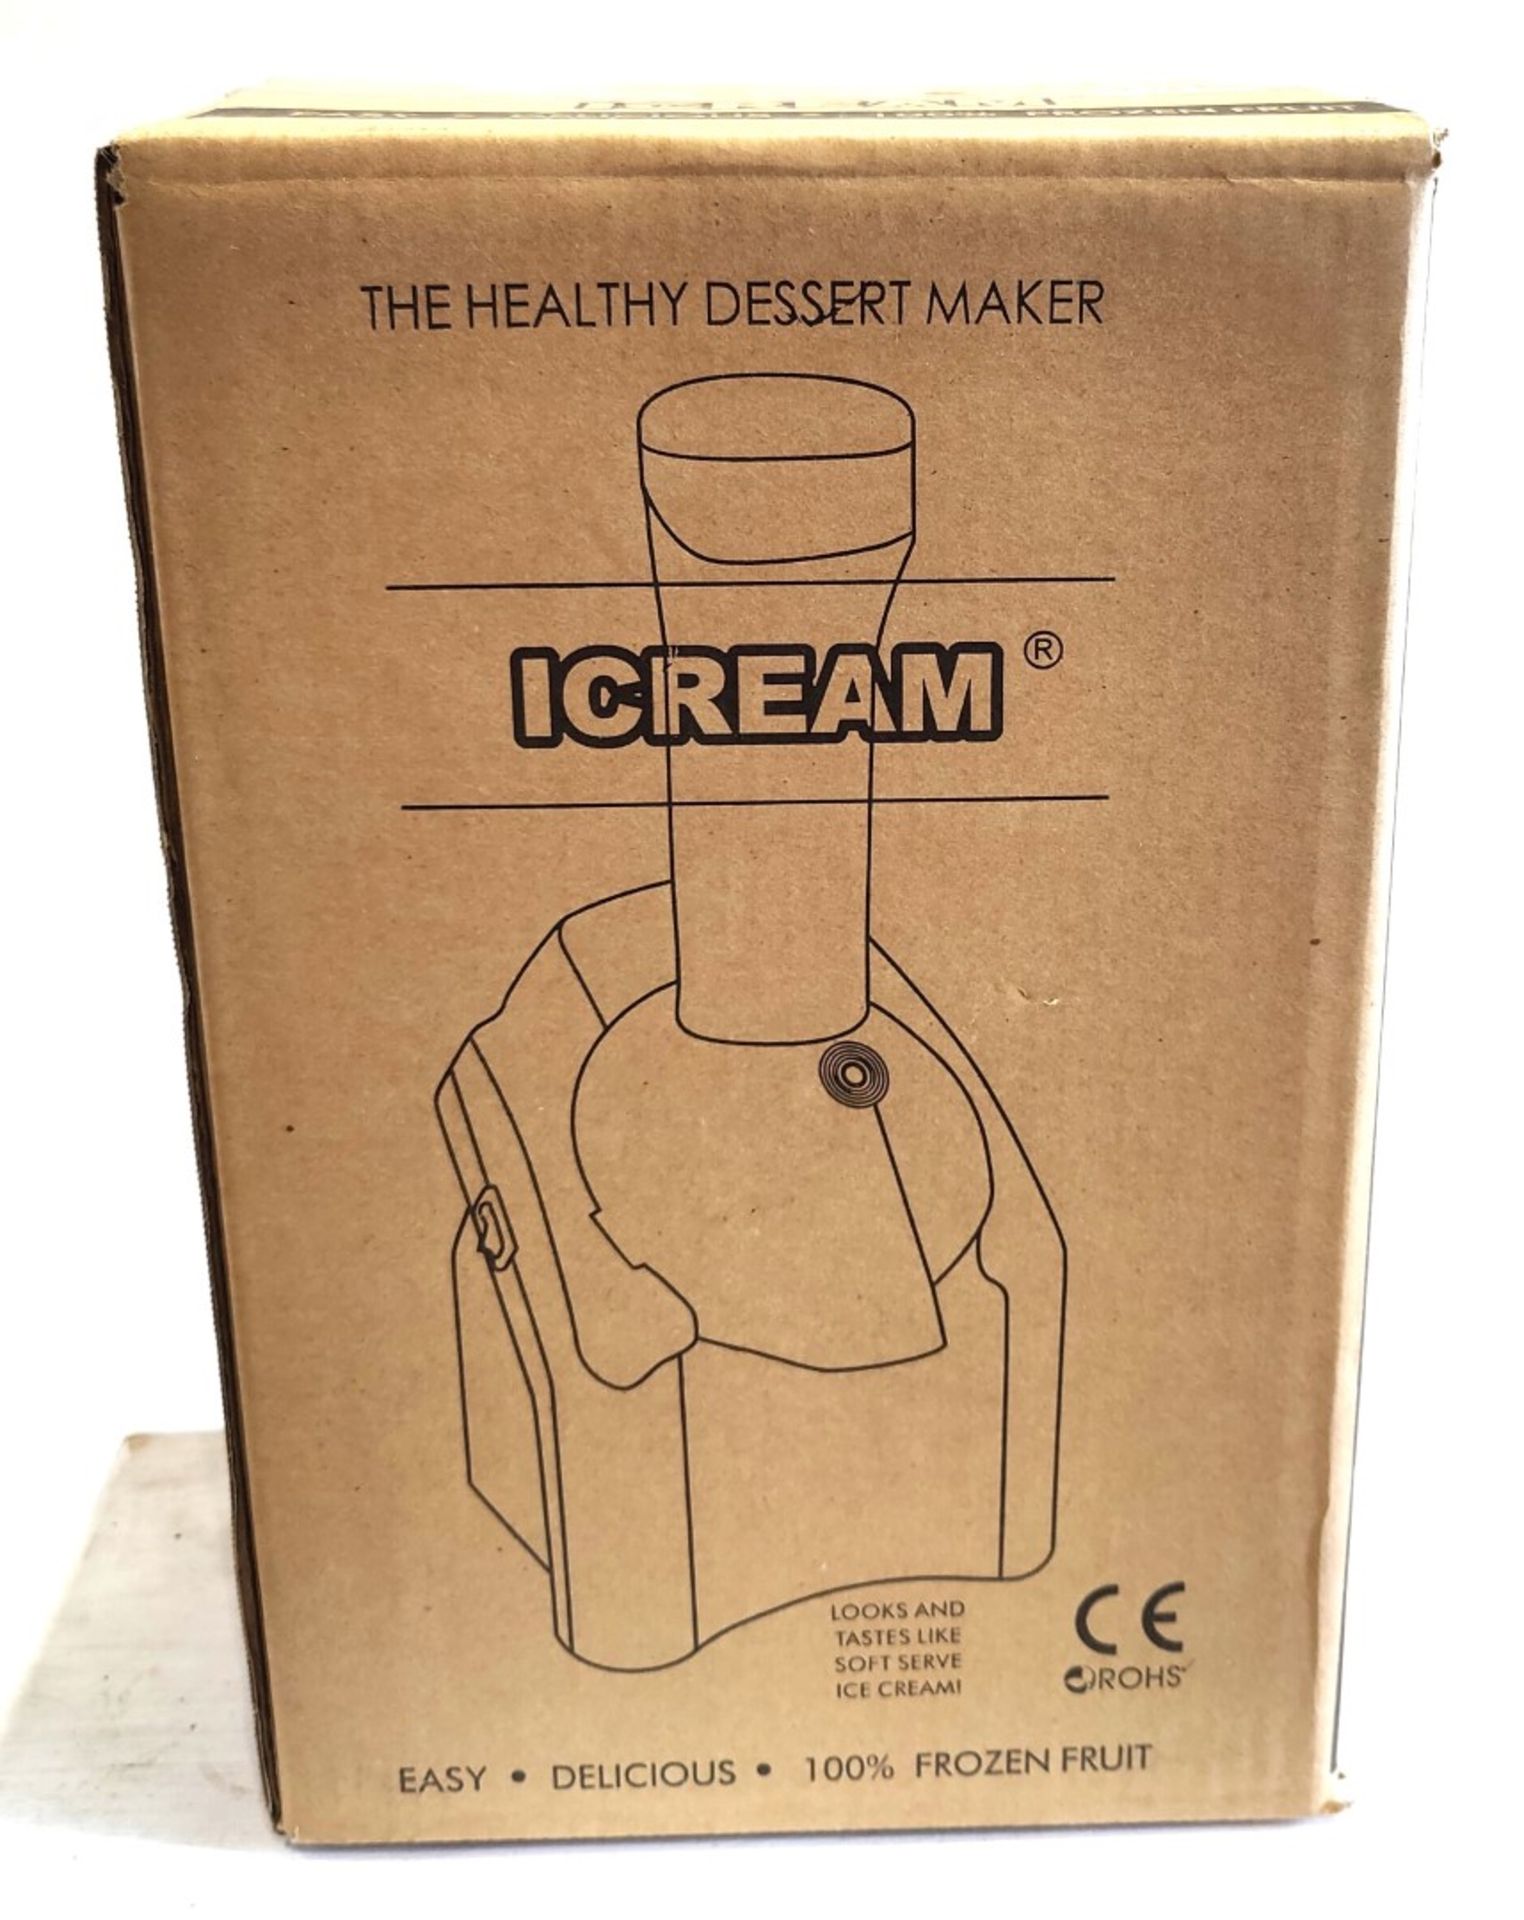 1 x Icream Healthy Desert Maker - Yogurt and Soft Ice Cream Home Appliance - 240v - Brand New - Image 11 of 12